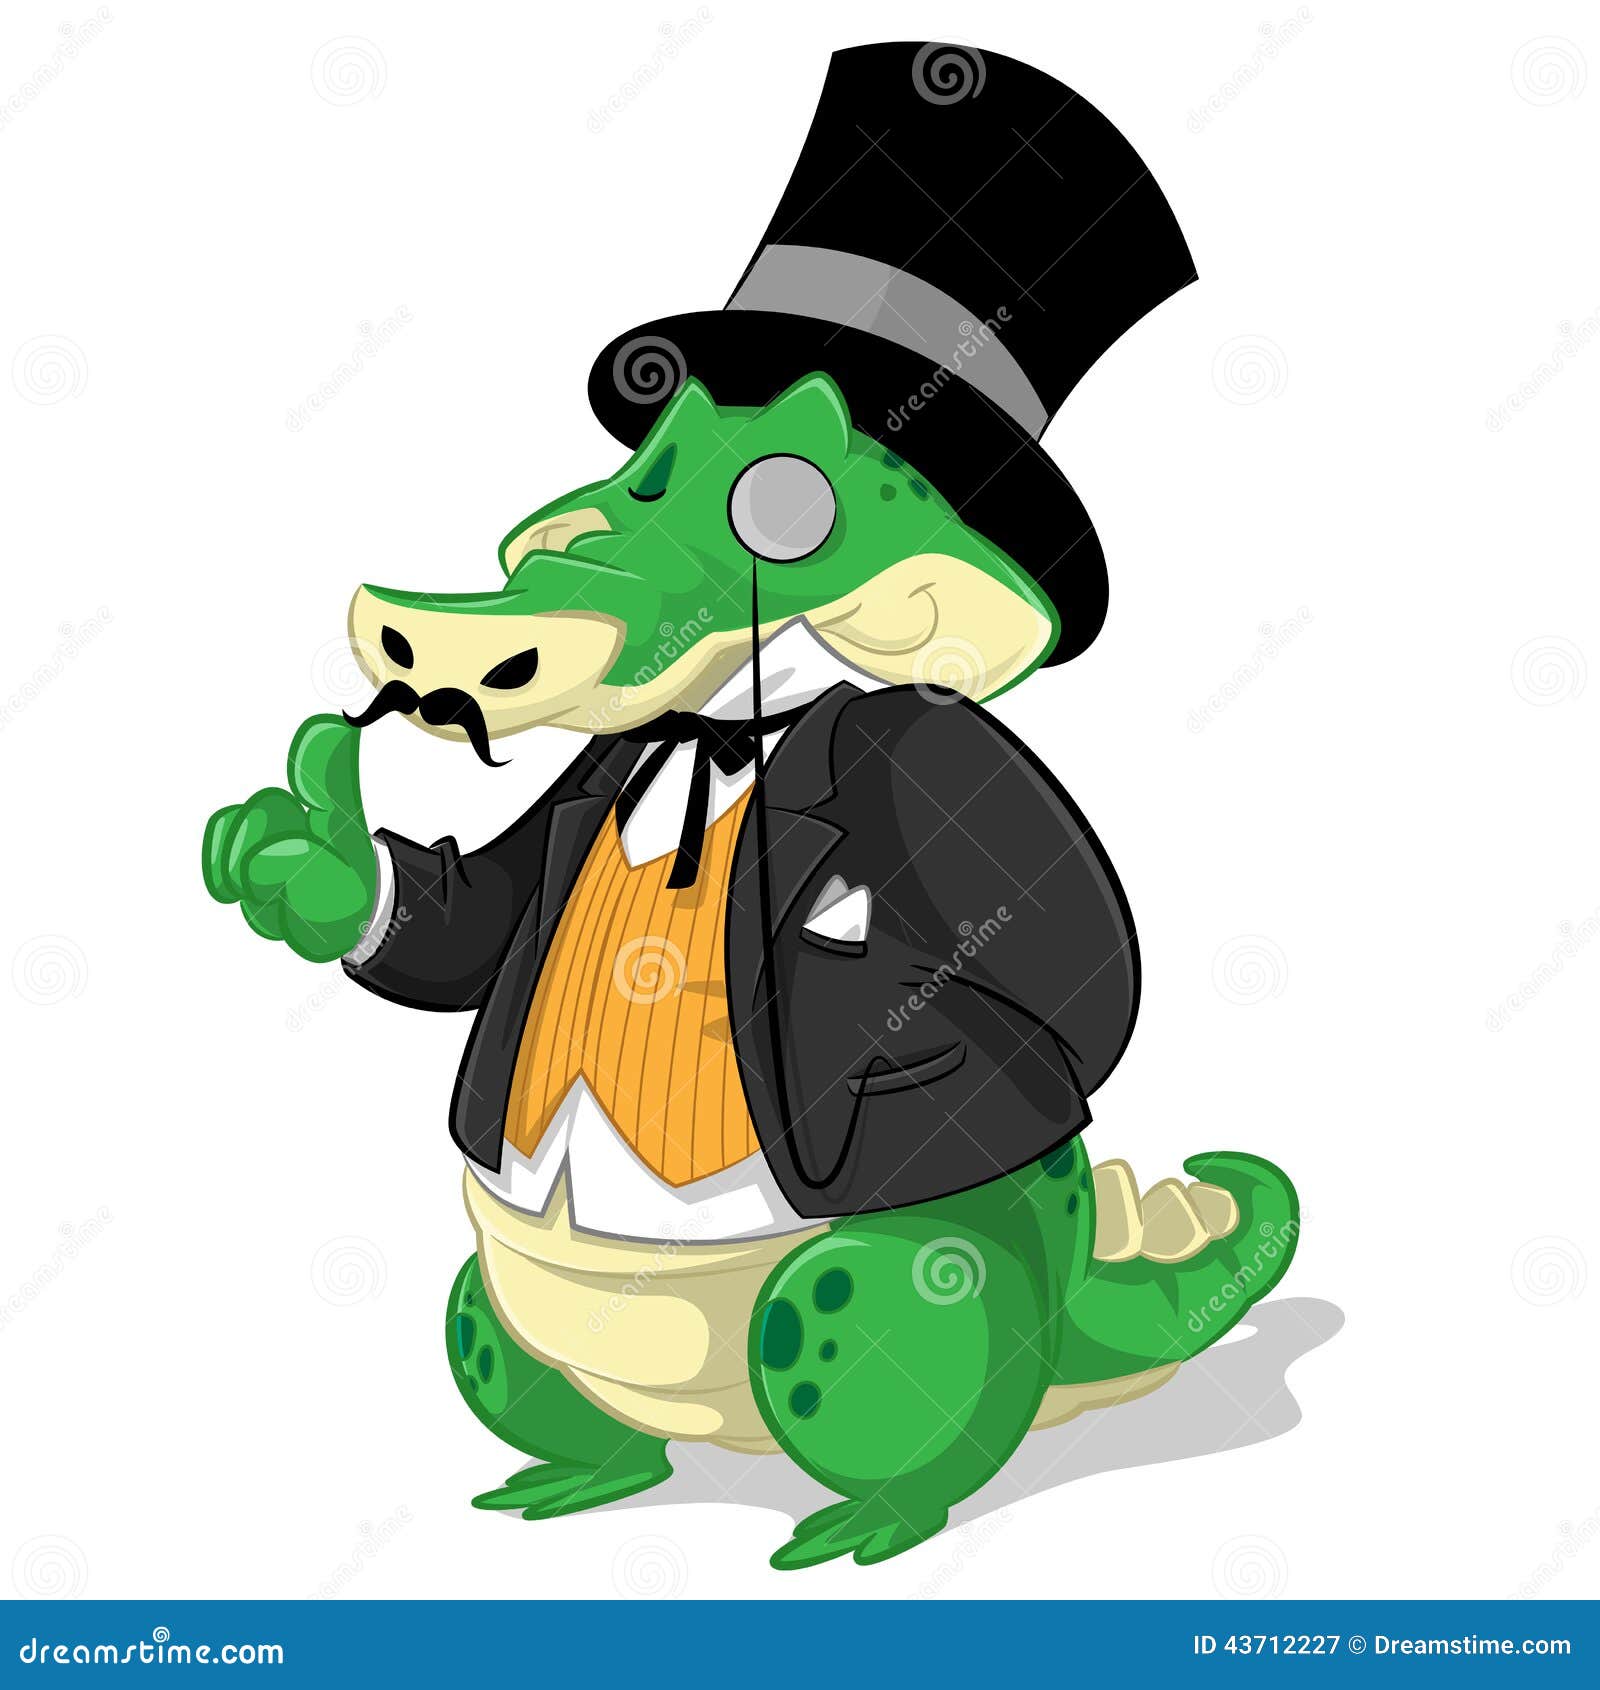 Alligator Cartoon stock vector. Illustration of suits - 43712227